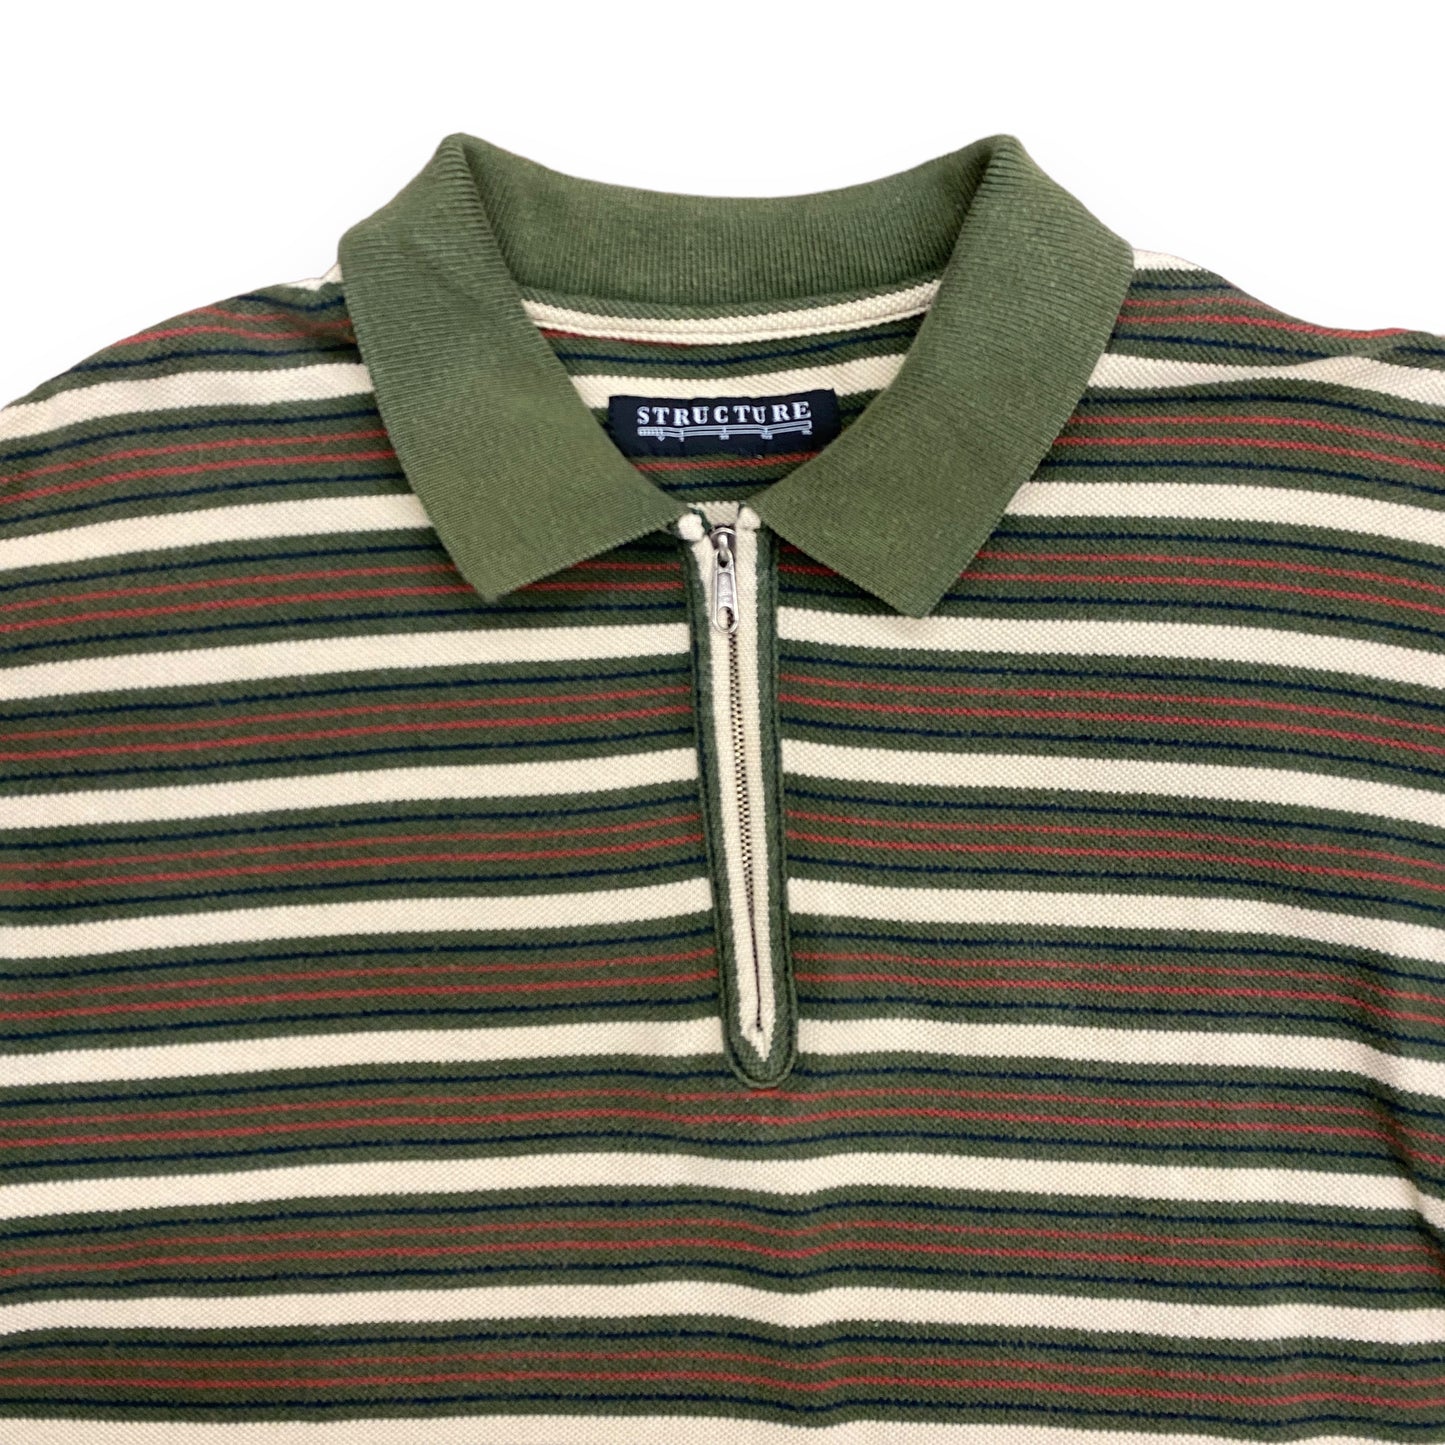 Vintage 1990s Structure Striped Quarter-Zip Polo Shirt - Size Large